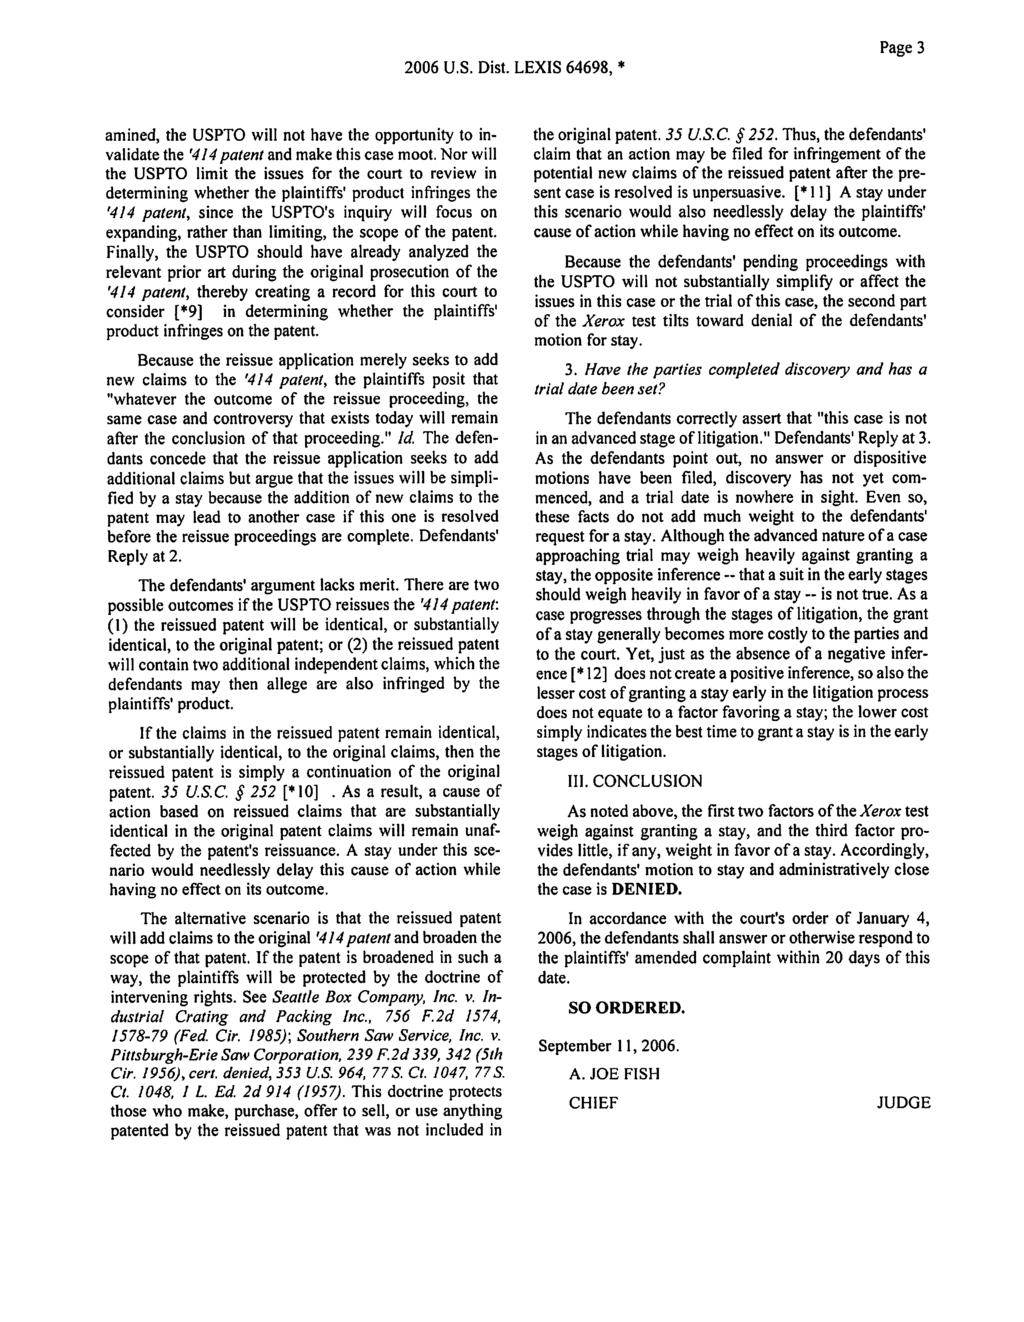 Case 1:07-cv-00054-JJF Document